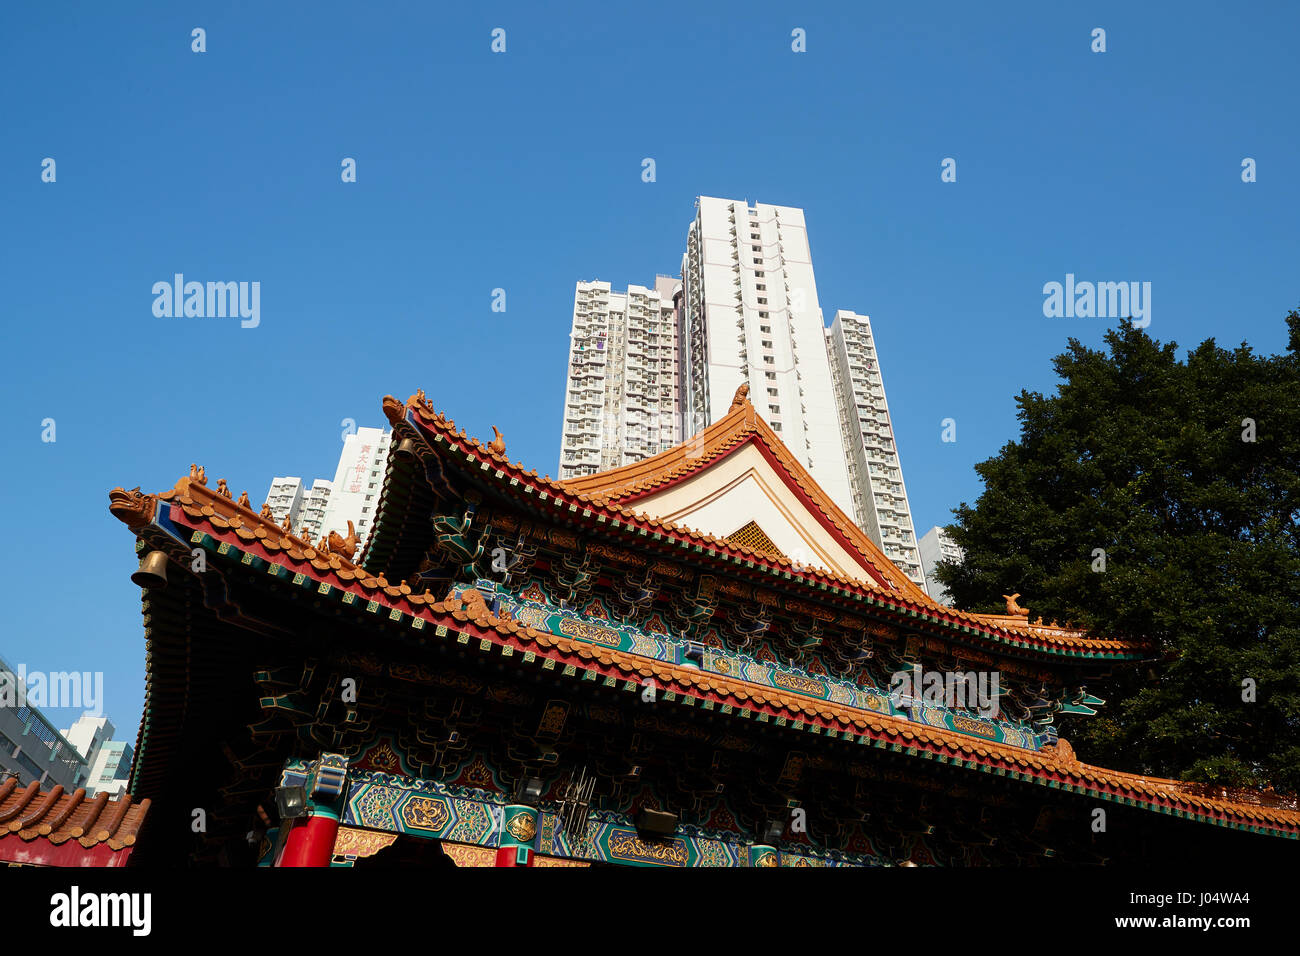 Contrasting Building Designs At The Wong Tai Sin Temple, Hong Kong. Stock Photo